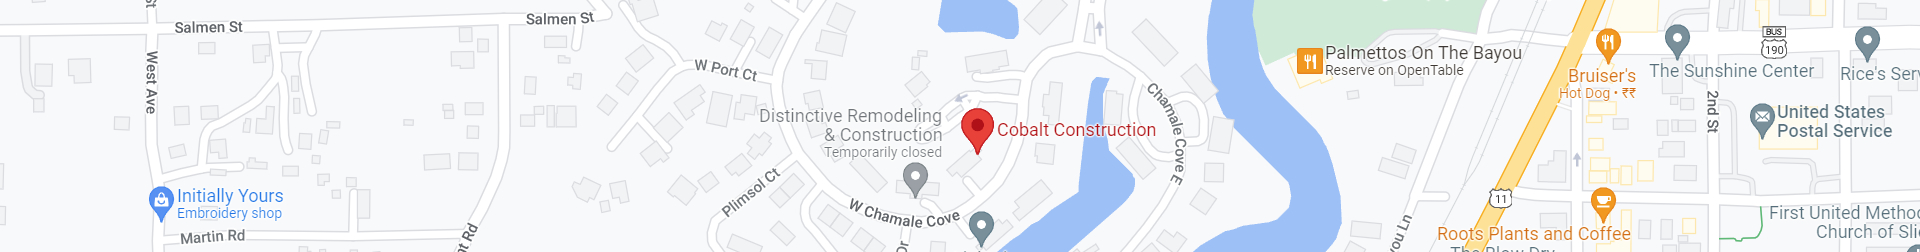 Cobalt Construction Inc